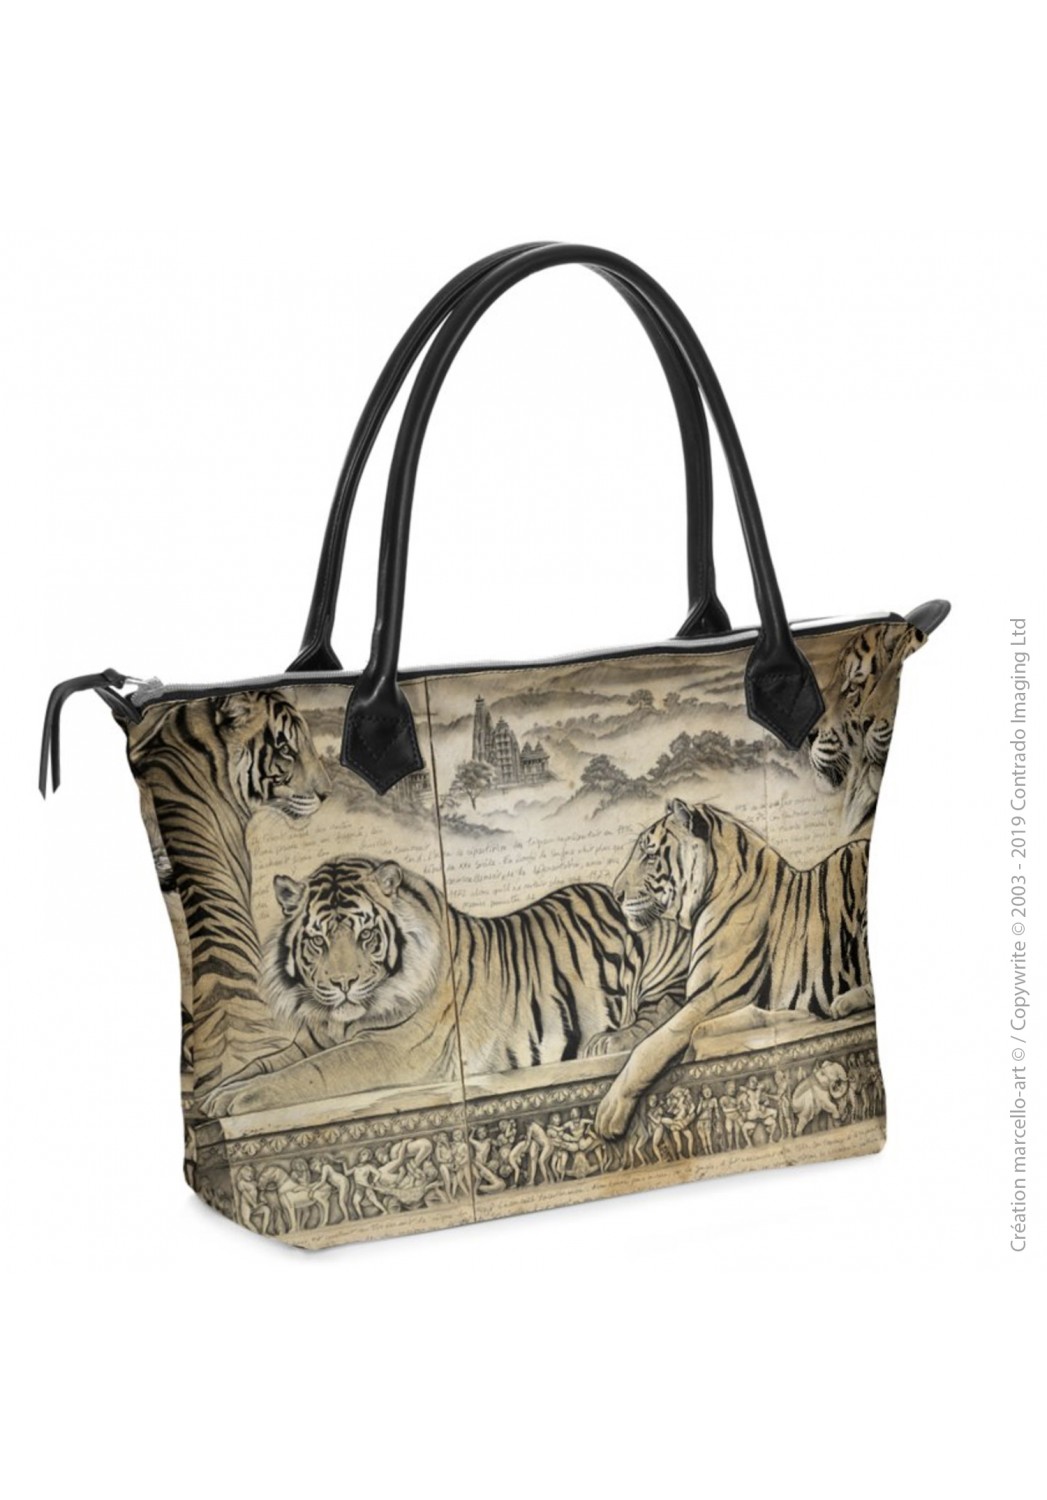 Marcello-art: Fashion accessory Zipped bag 304 kamasutra